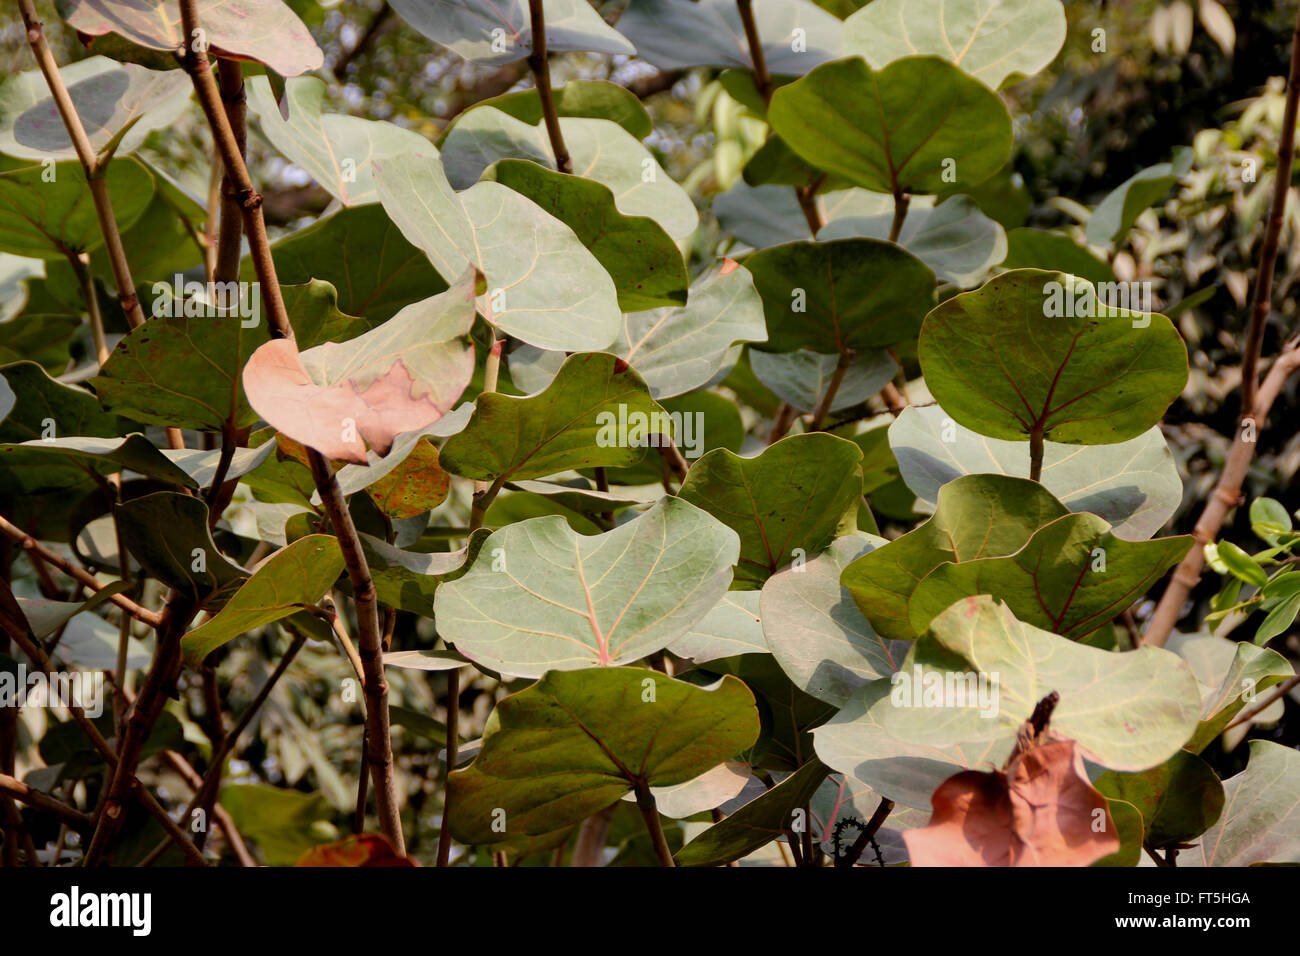 Coccoloba uvifera, Baygrape, Seagrape, small tree of coastal regions often cultivated with rounded leaves, grape-like fruits Stock Photo